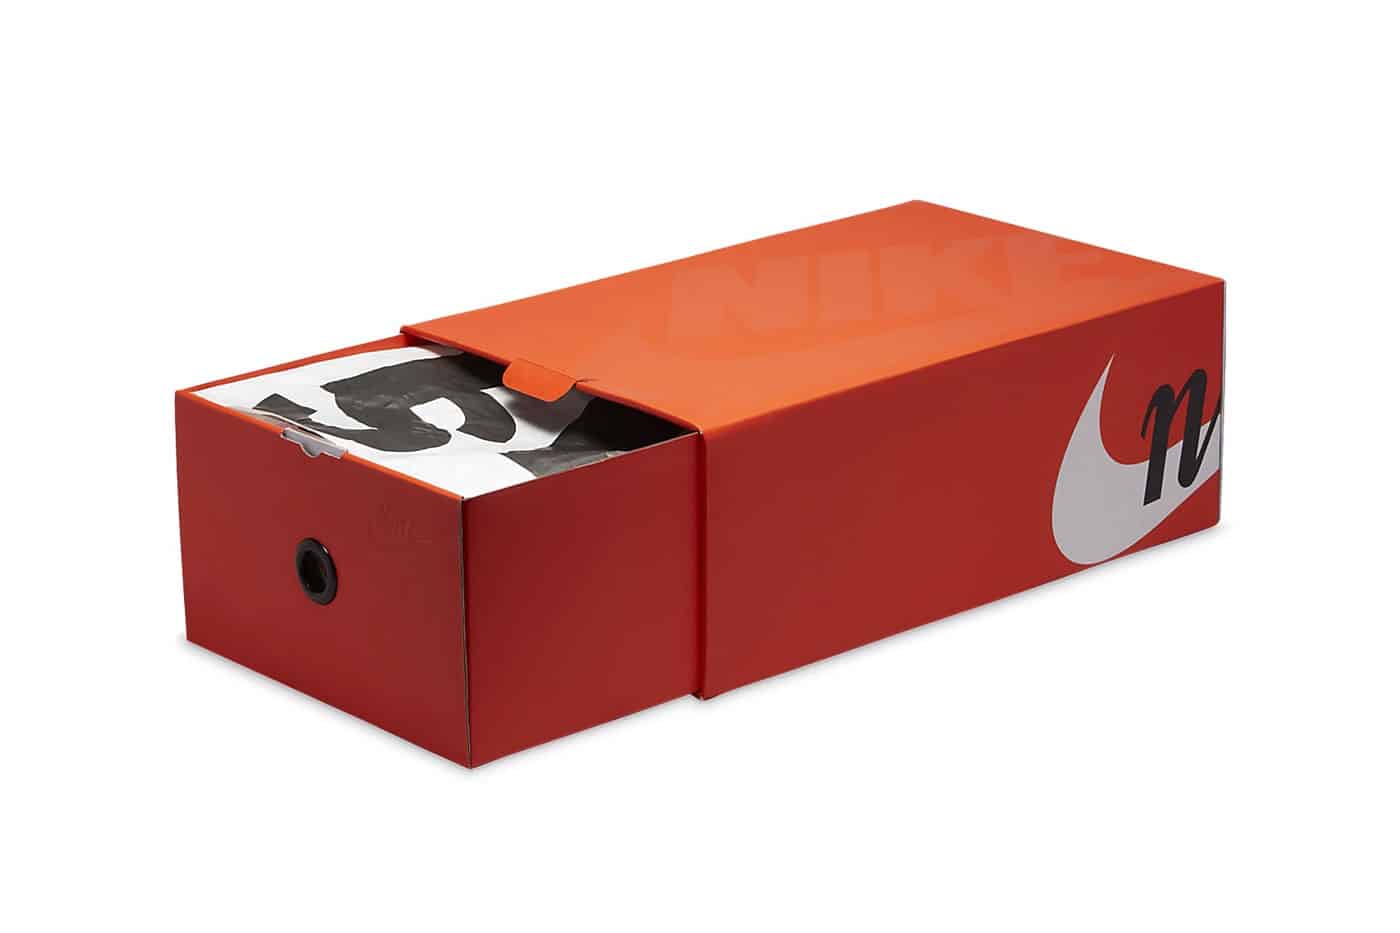 sacai x Nike Cortez 4.0 "OG"